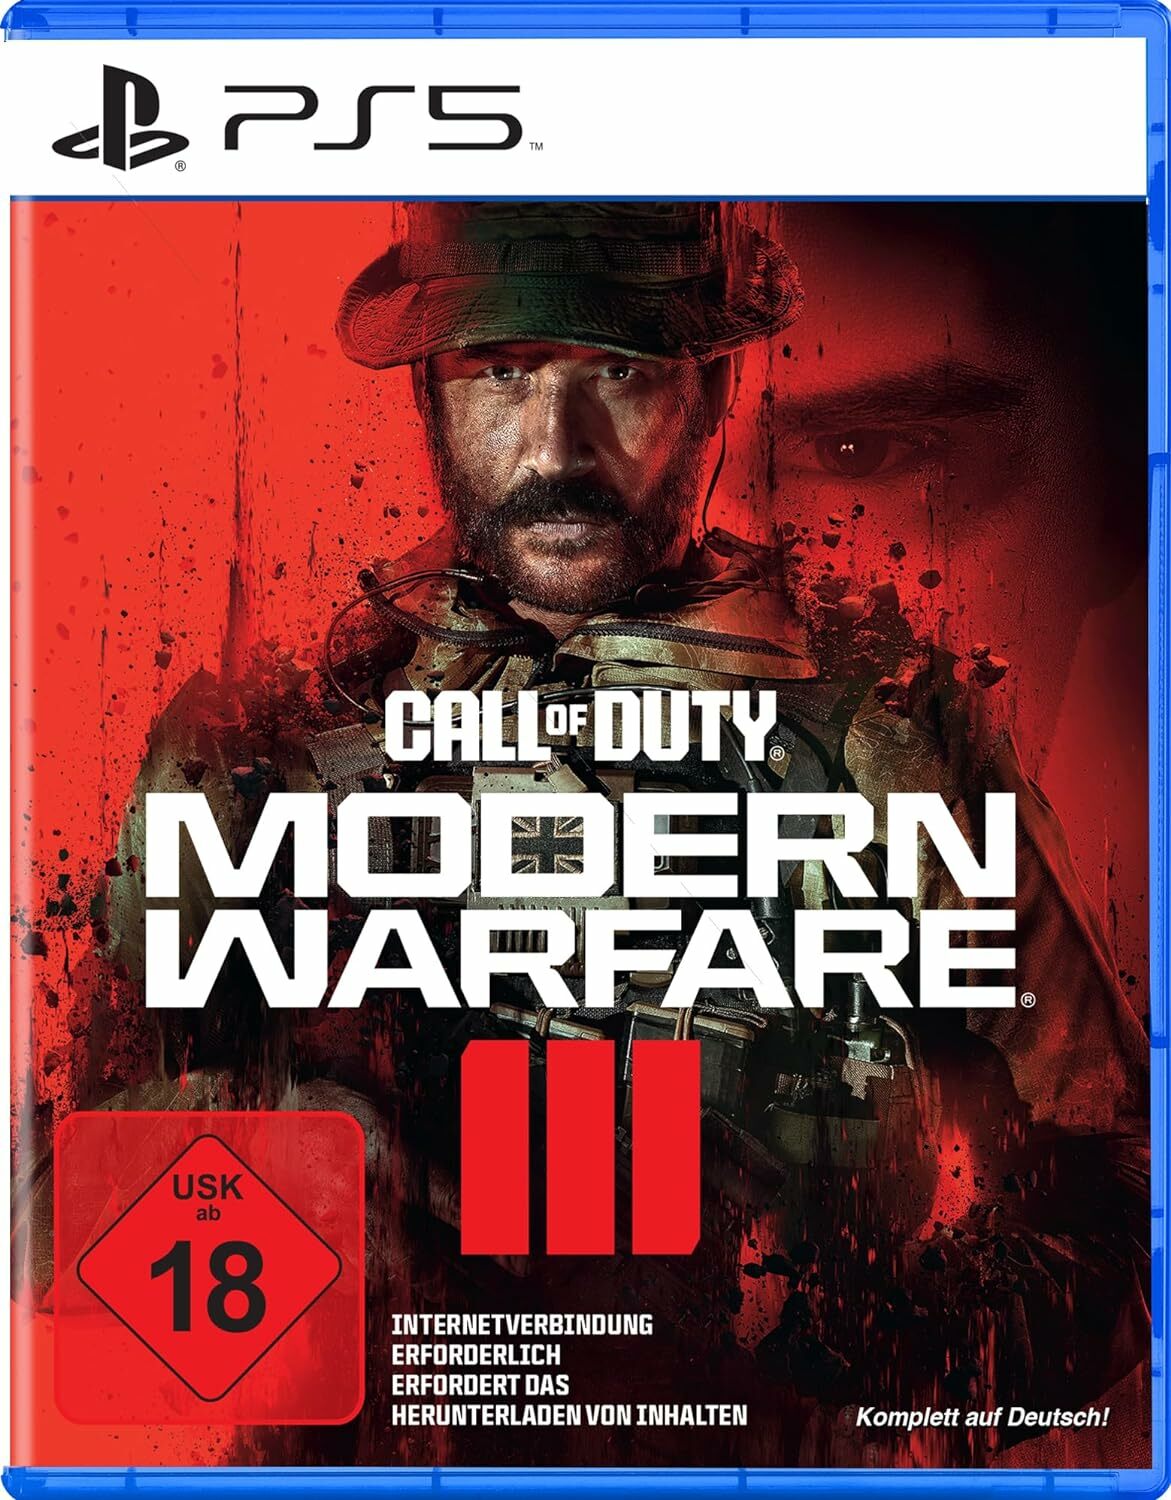 Call of Duty Modern Warfare 3 Widget